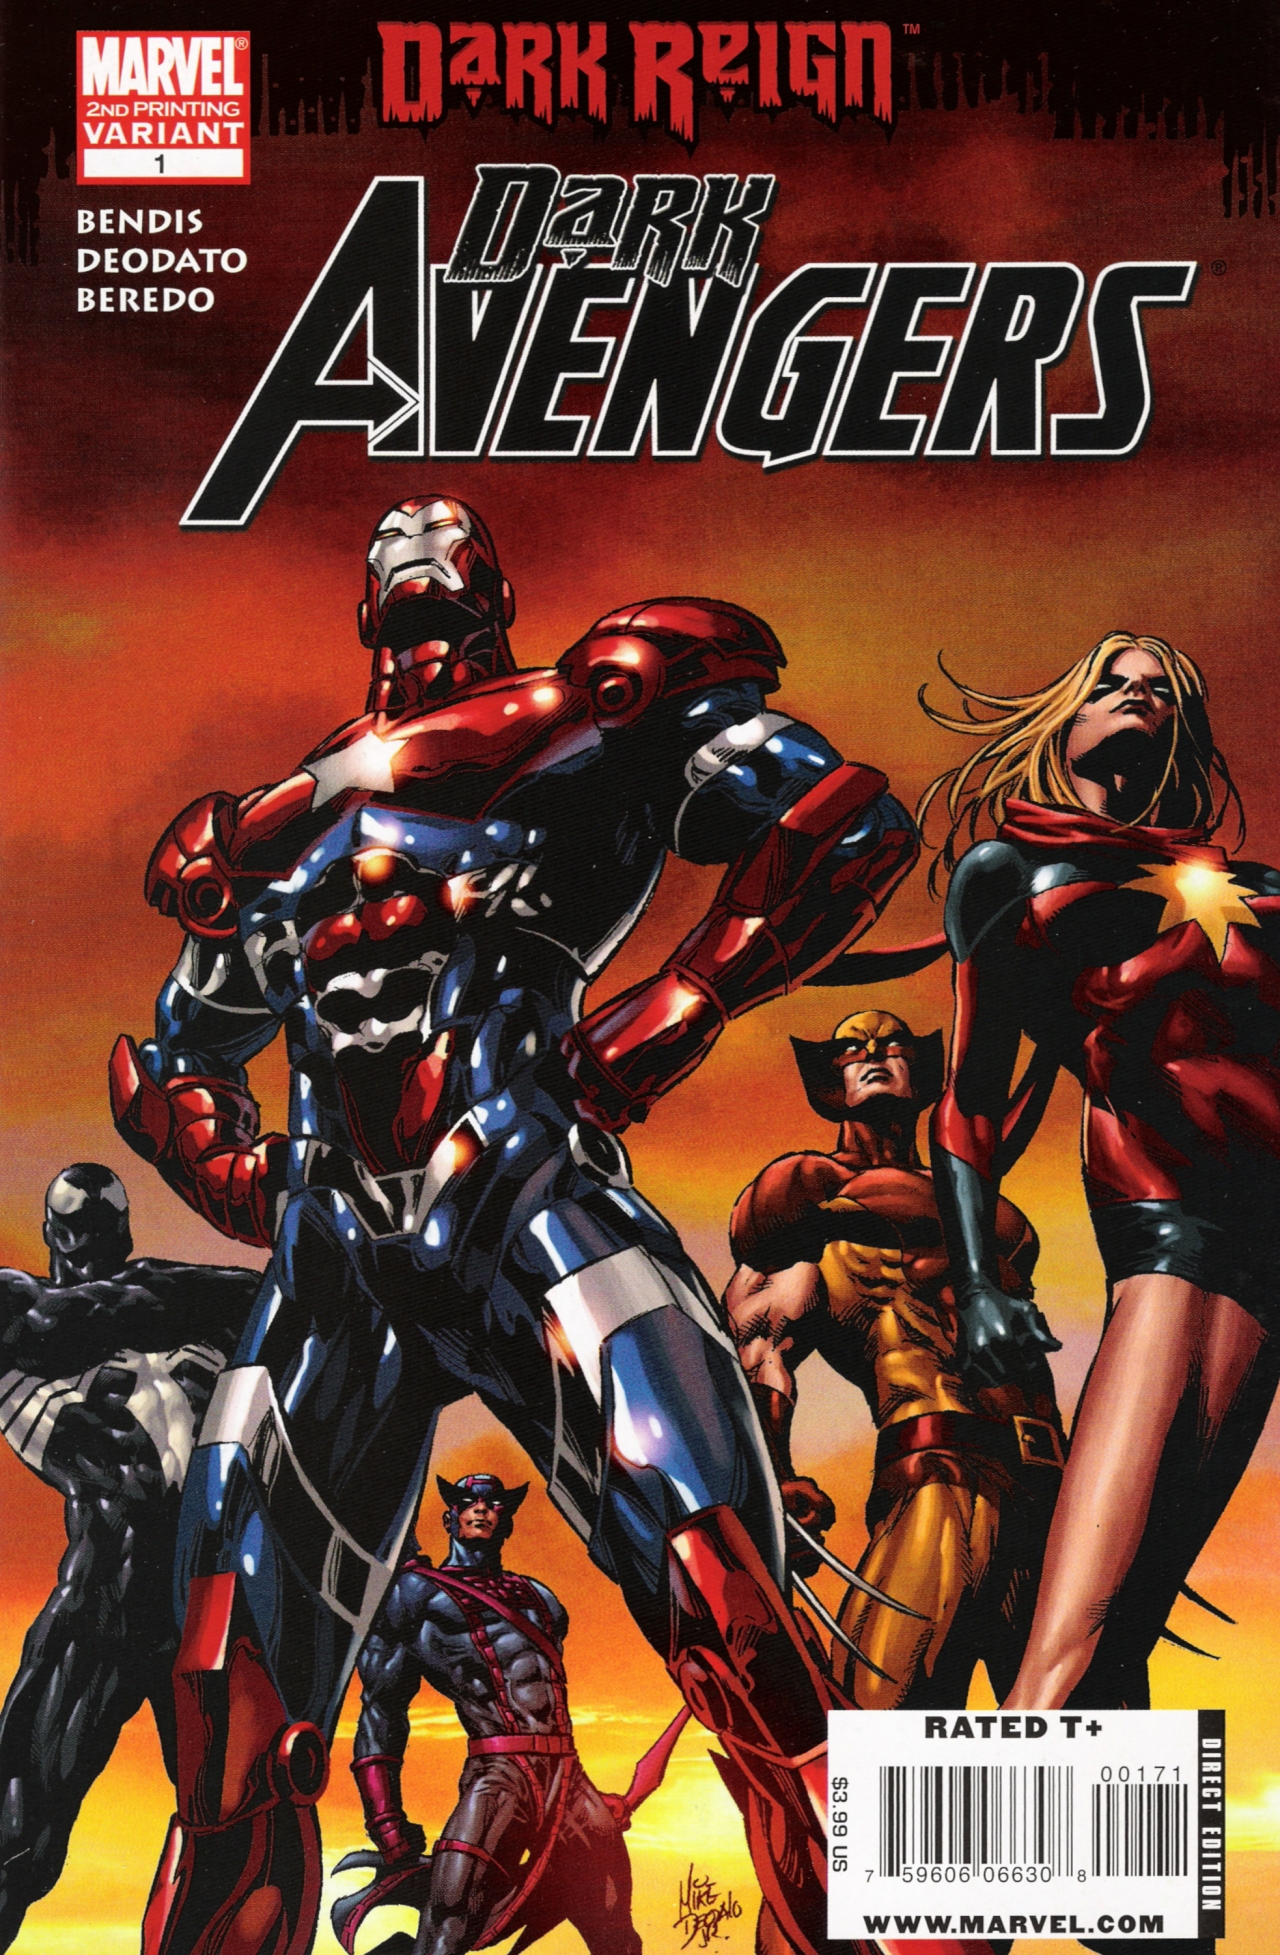 Dark Avengers Backgrounds on Wallpapers Vista